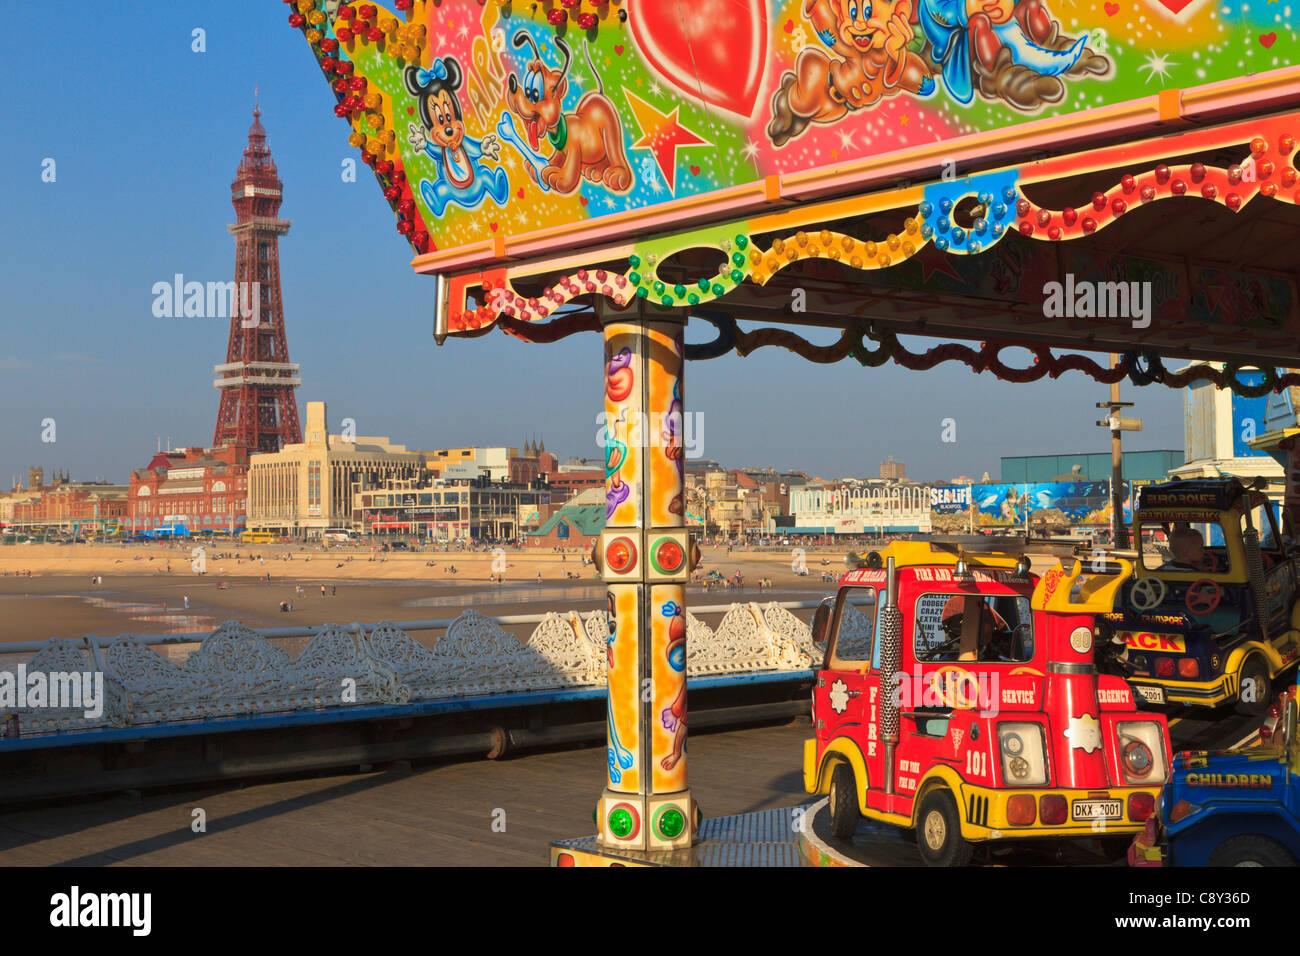 Tower and amusement arcade, Blackpool, England Stock Photo